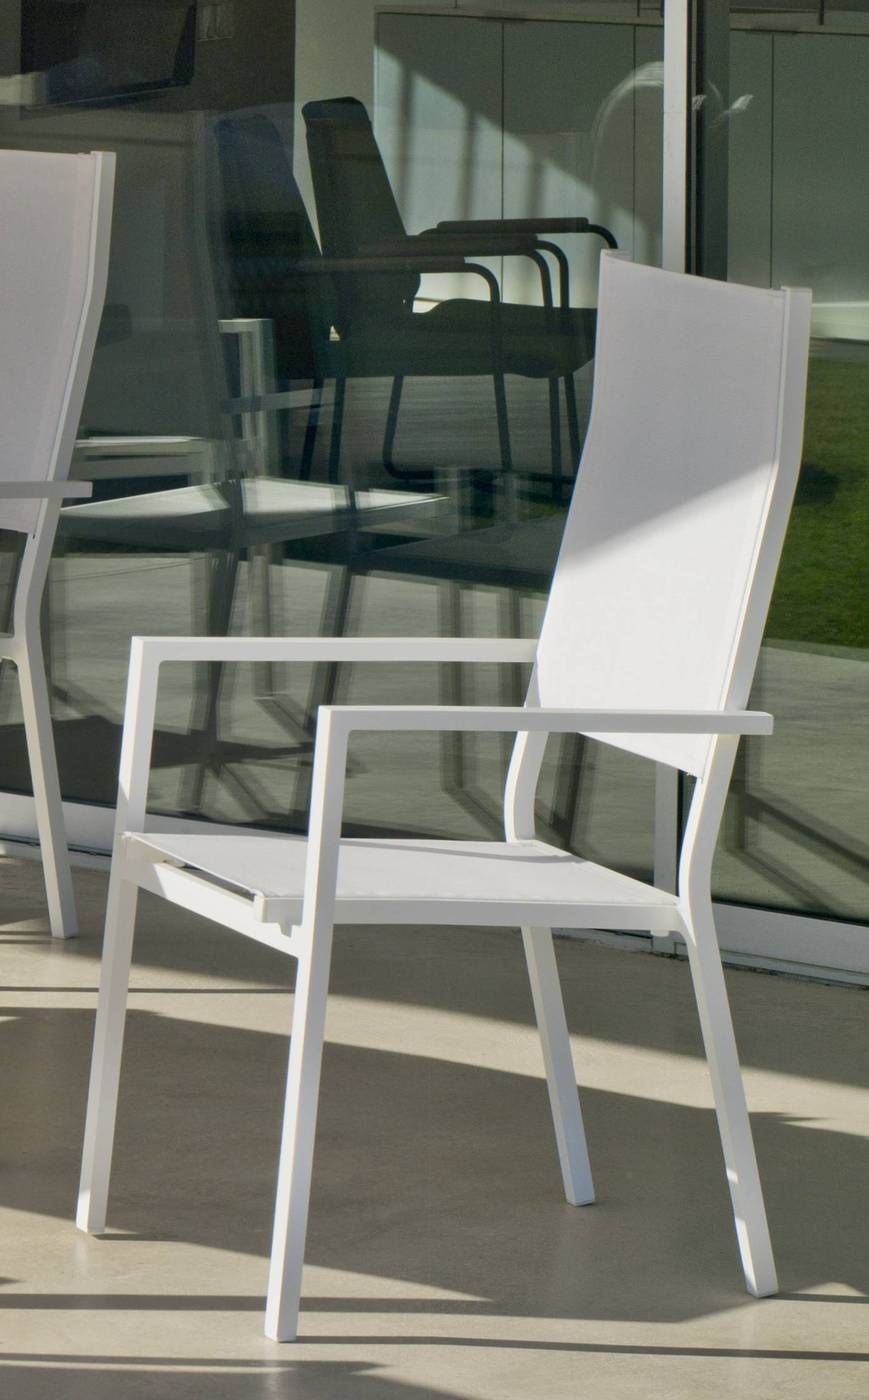 Set Córcega-160-6 Janeiro - Conjunto de aluminio para jardín: Mesa rectangular con tablero HPL de 160 cm + 6 sillones altos de textilen. Colores: blanco y antracita.